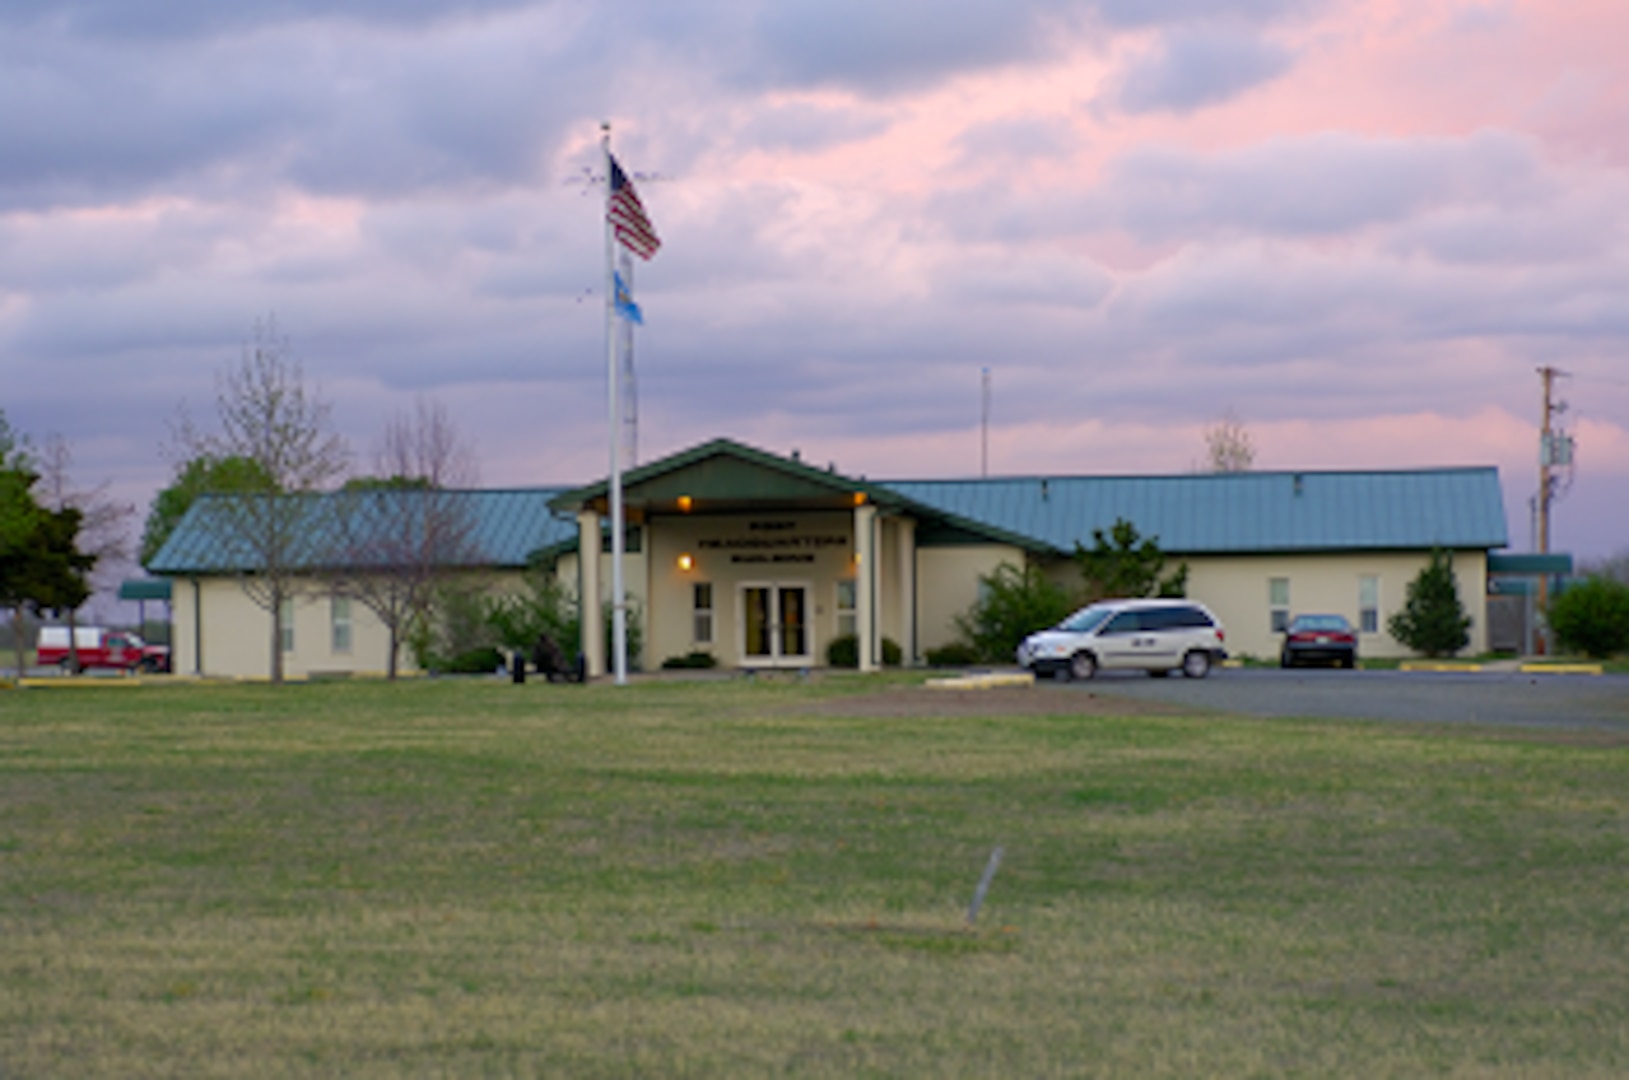 Camp Gruber Training Center Headquarters building.